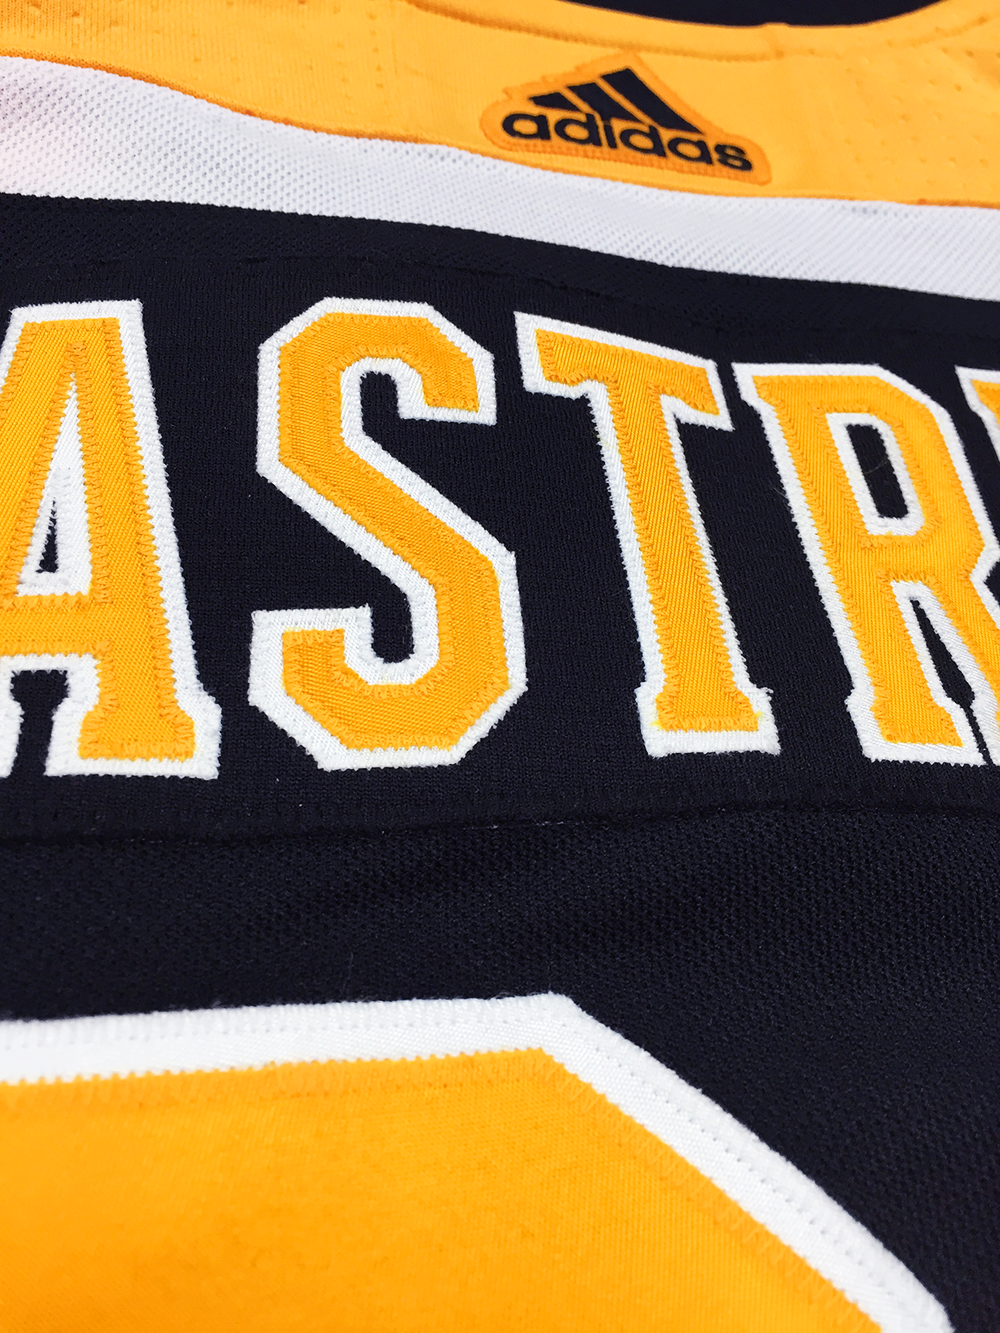 Adidas David Pastrnak Boston Bruins Youth Authentic 2019 Winter